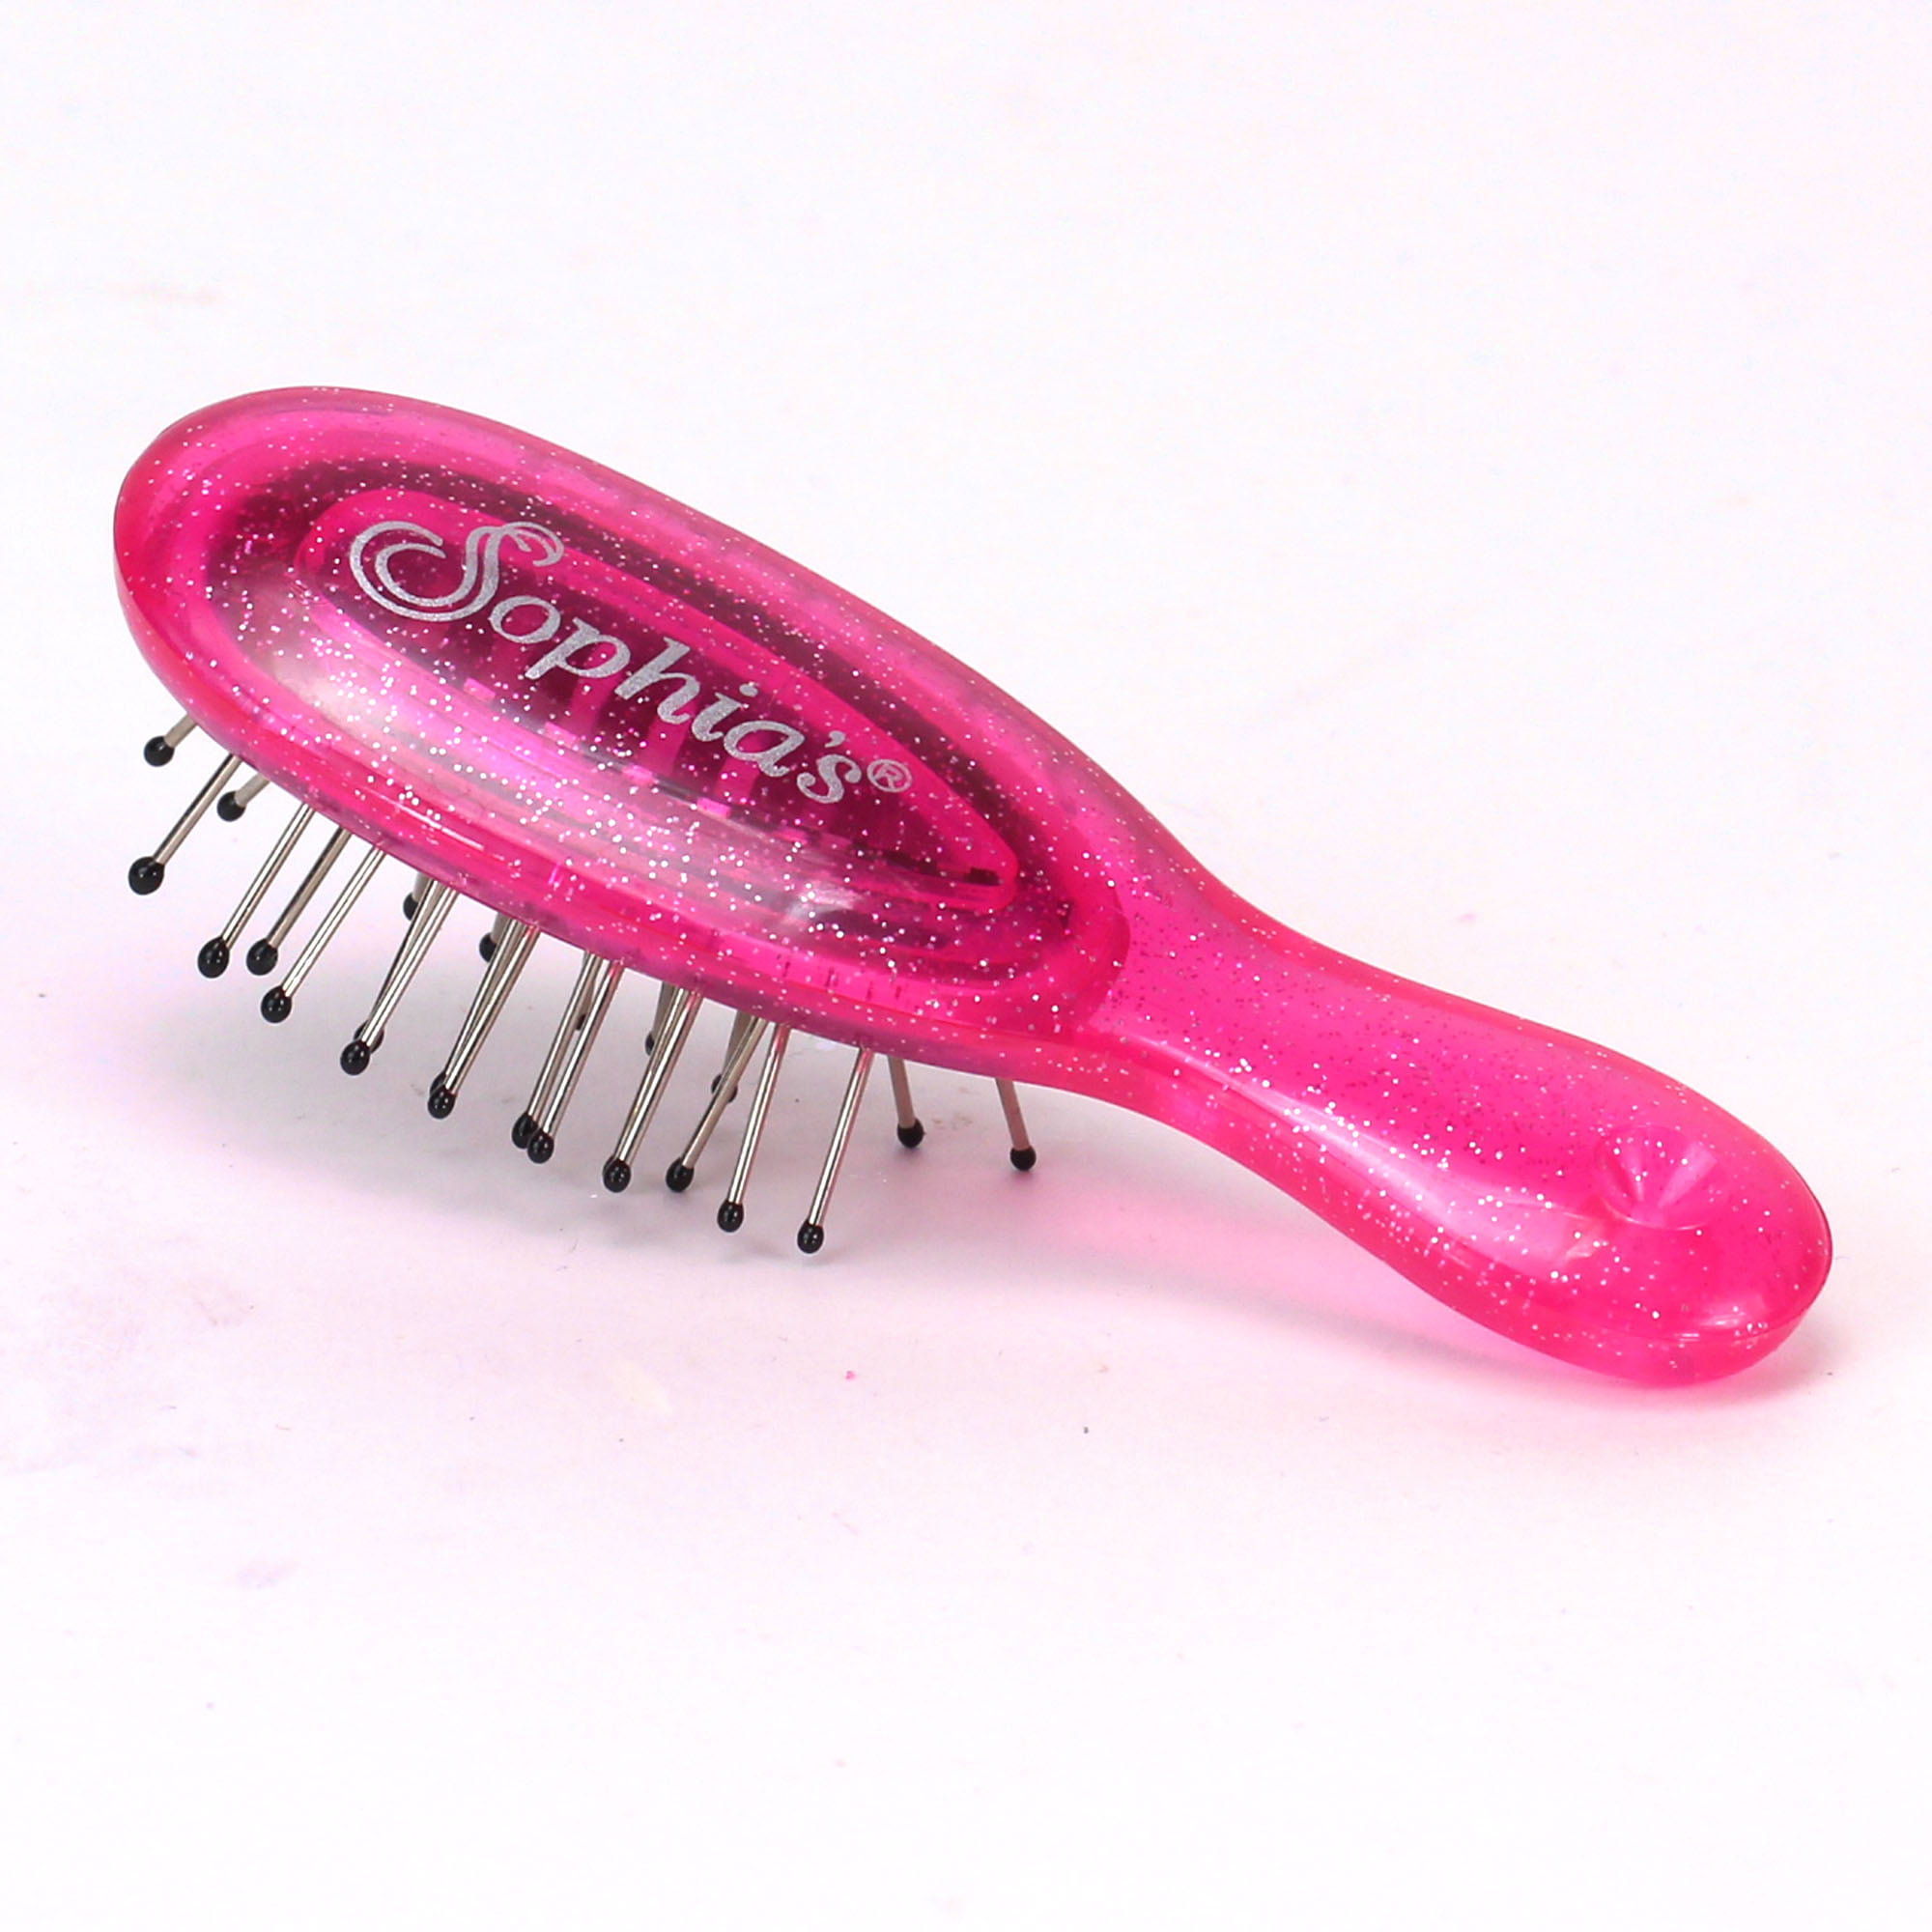  Civaner 3 Pieces Doll Hair Brush Kit Plastic Pink Doll